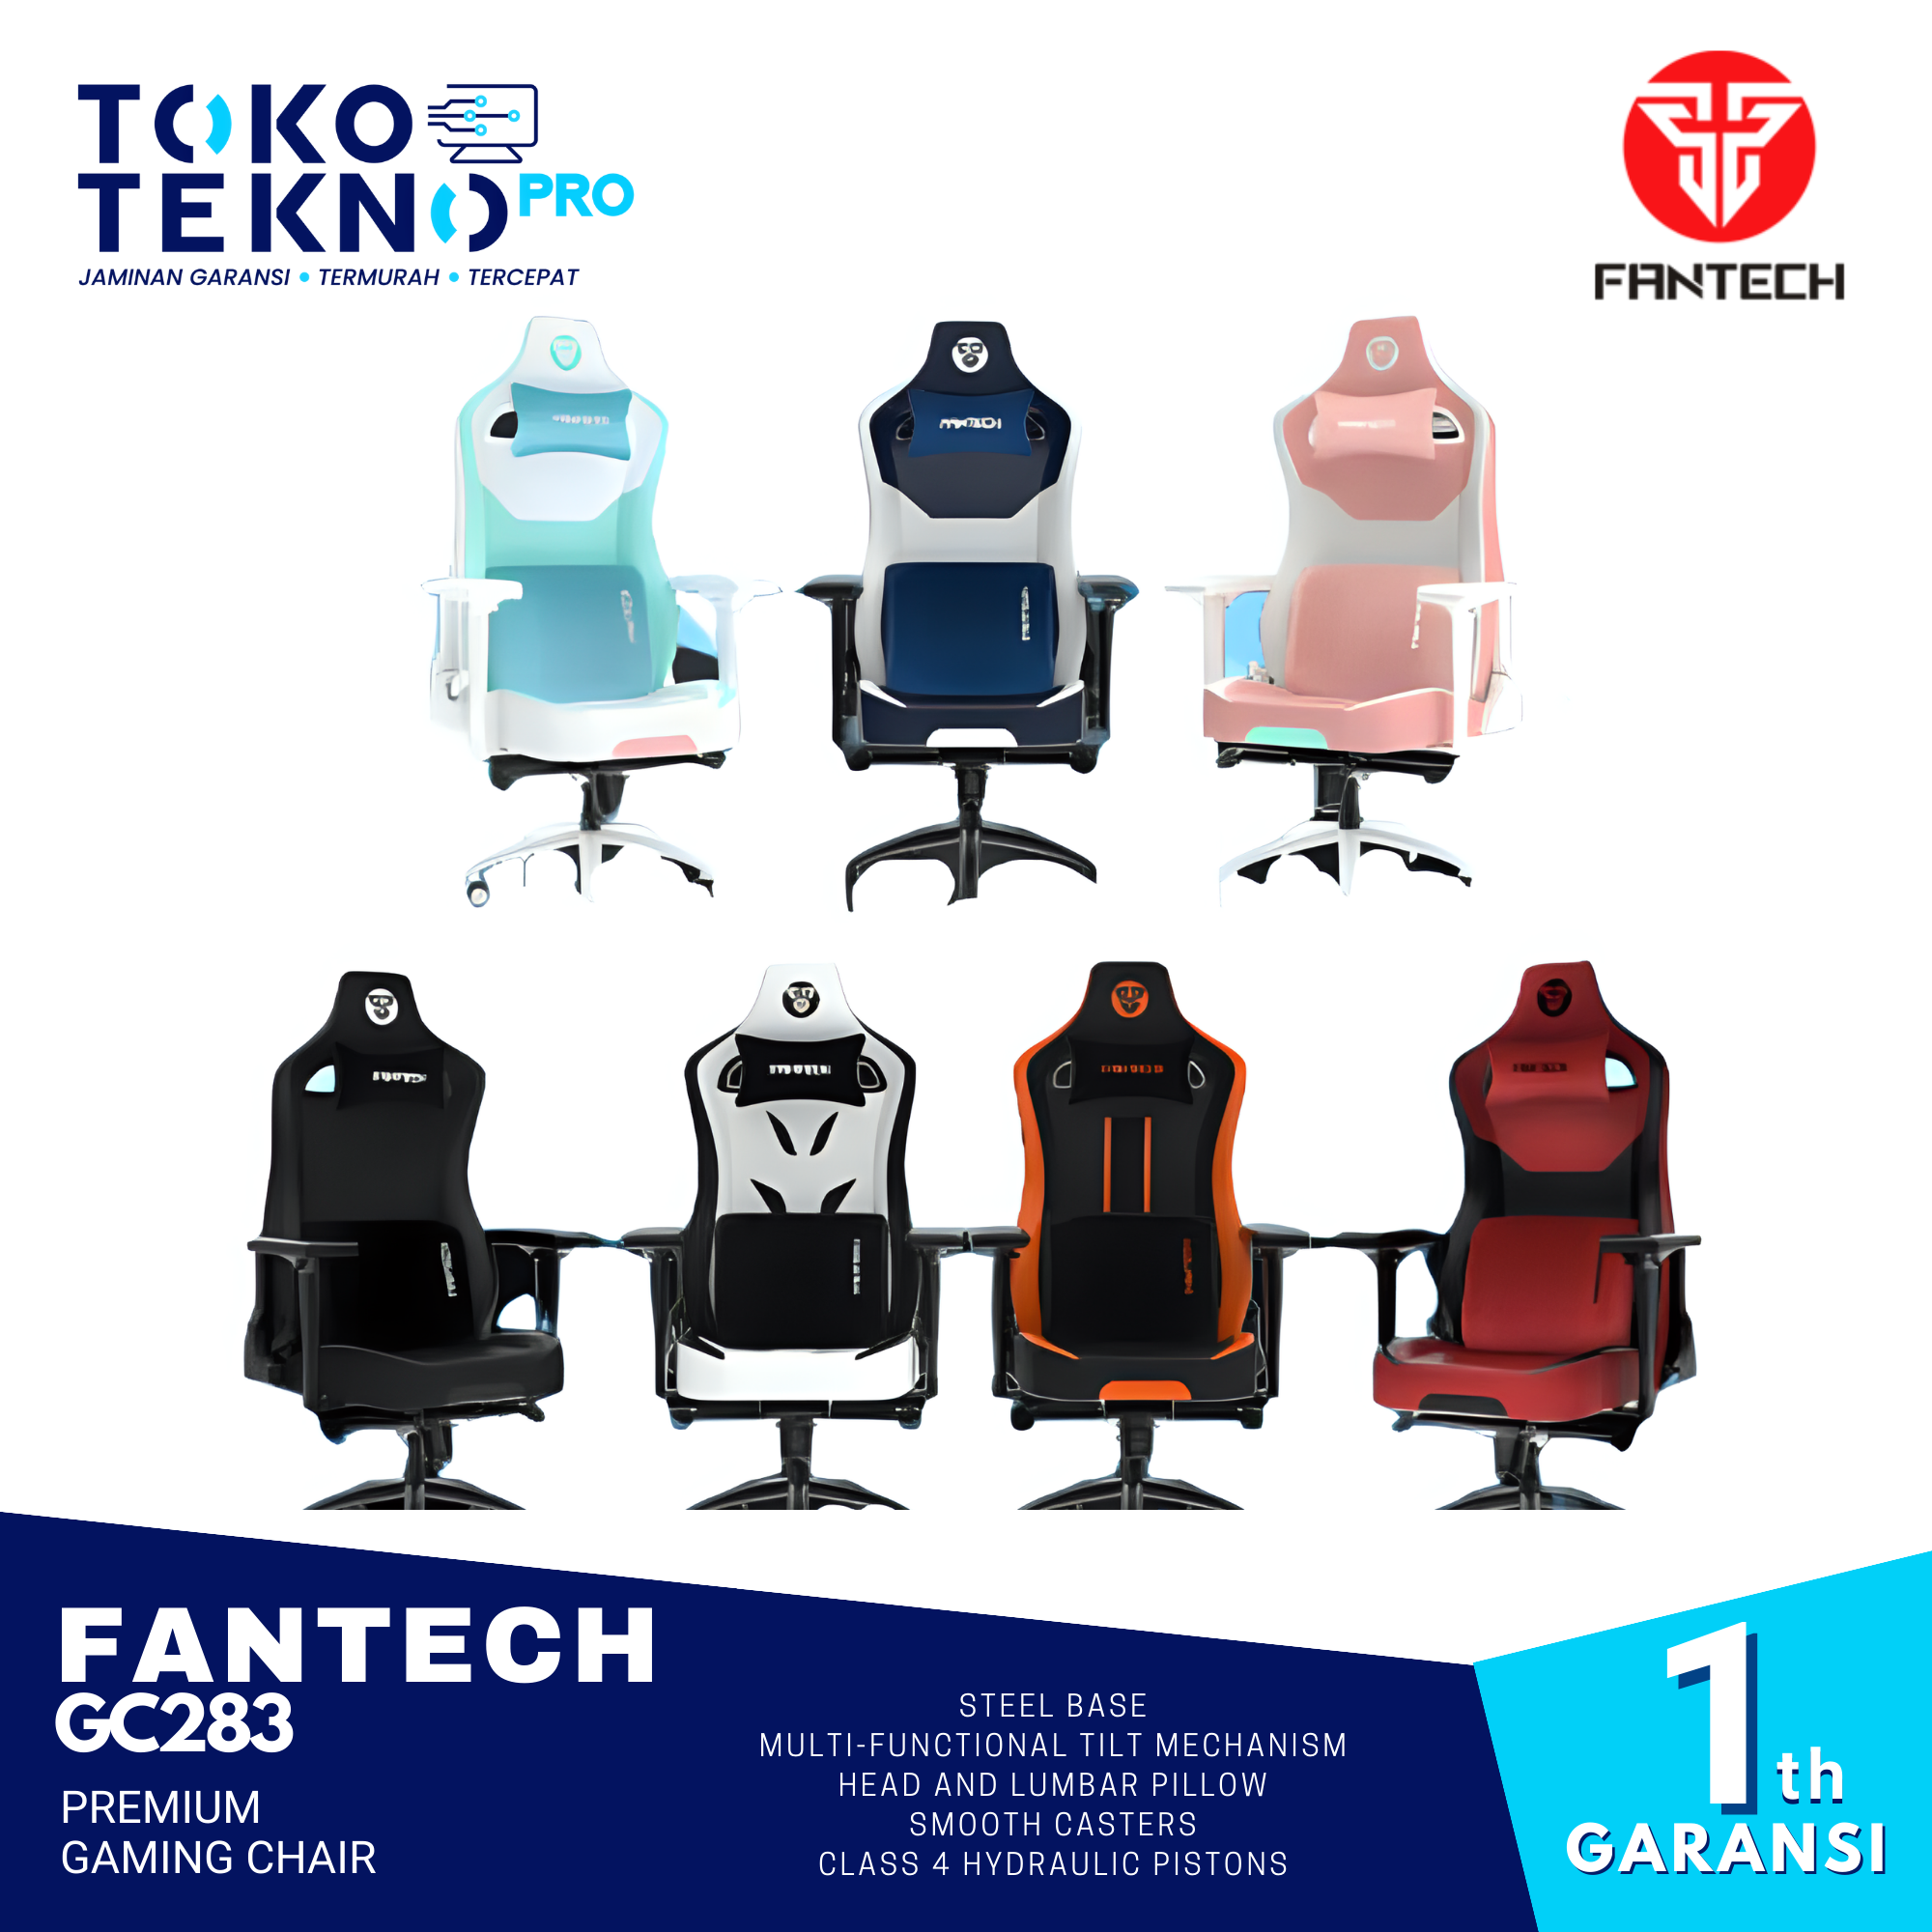 Fantech GC283 Premium Gaming Chair